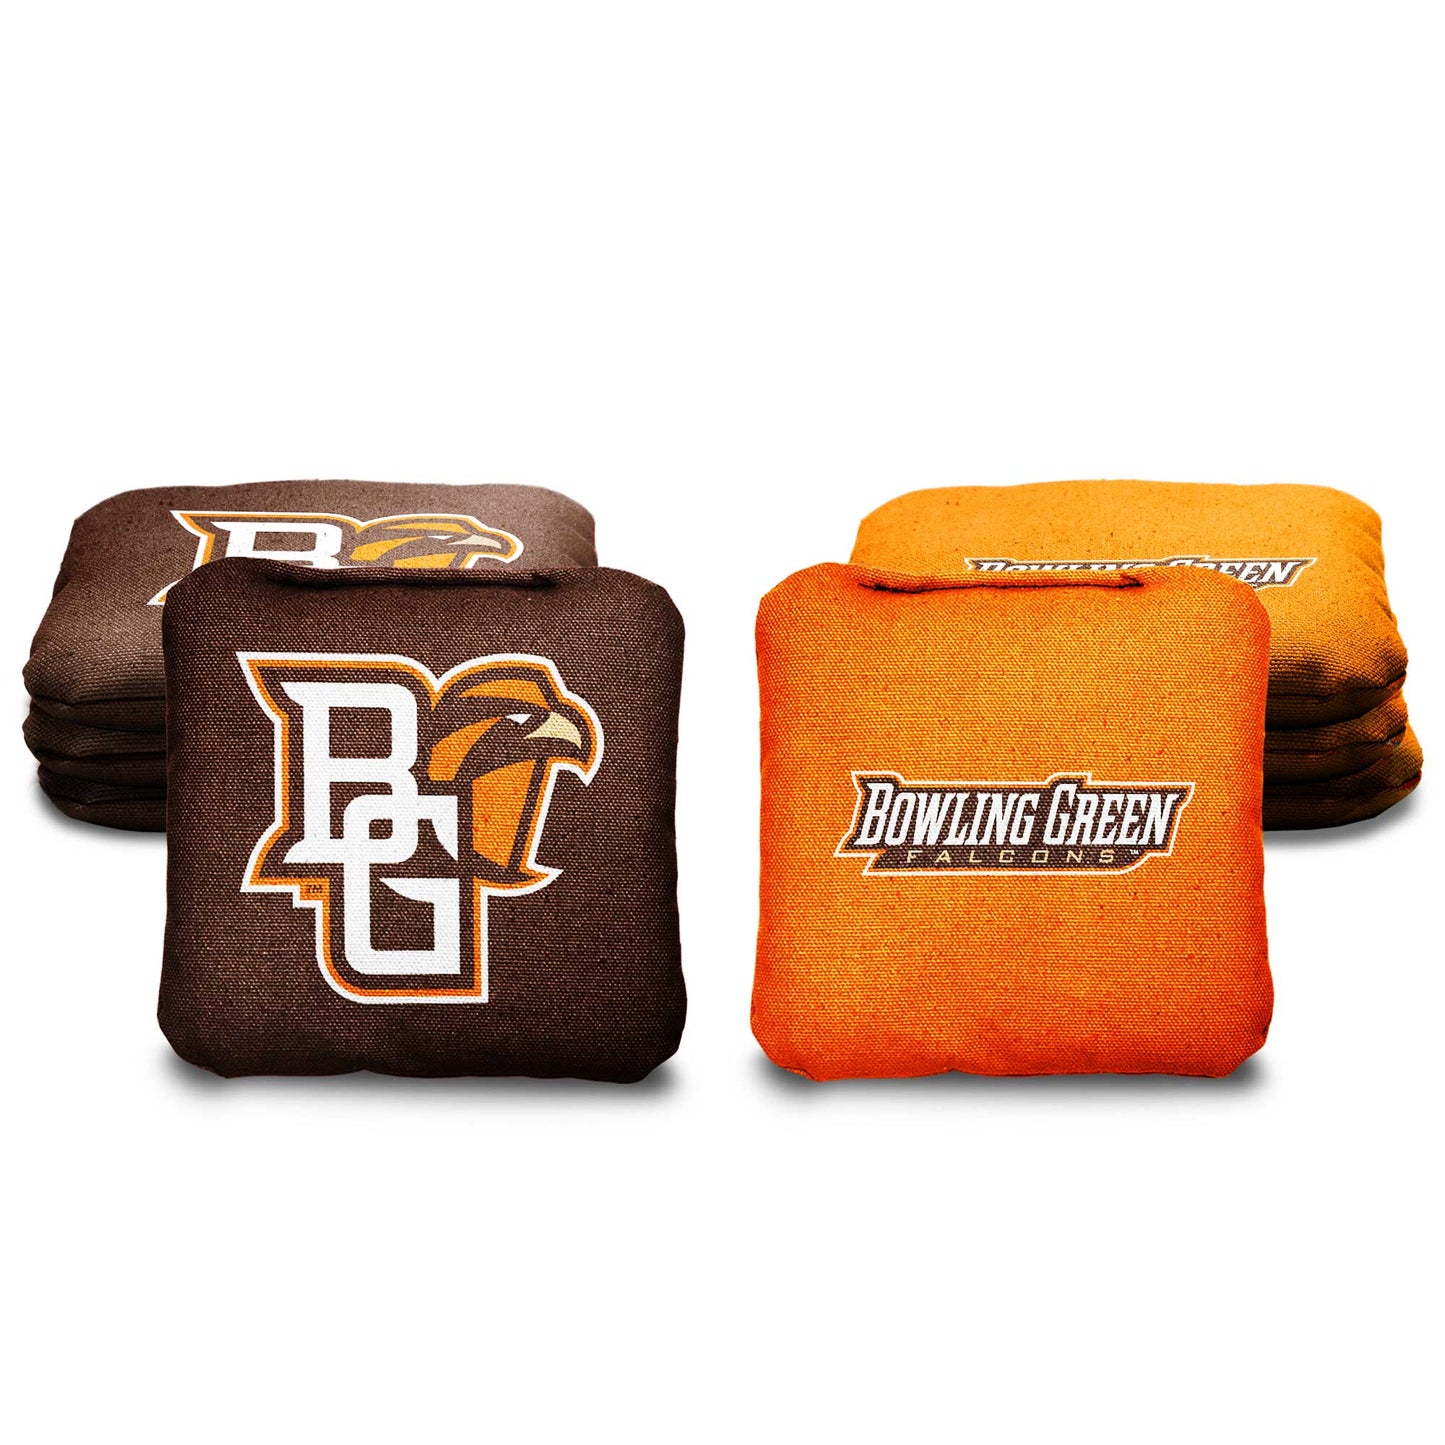 Bowling Green State University Cornhole Bags - 8 Cornhole Bags